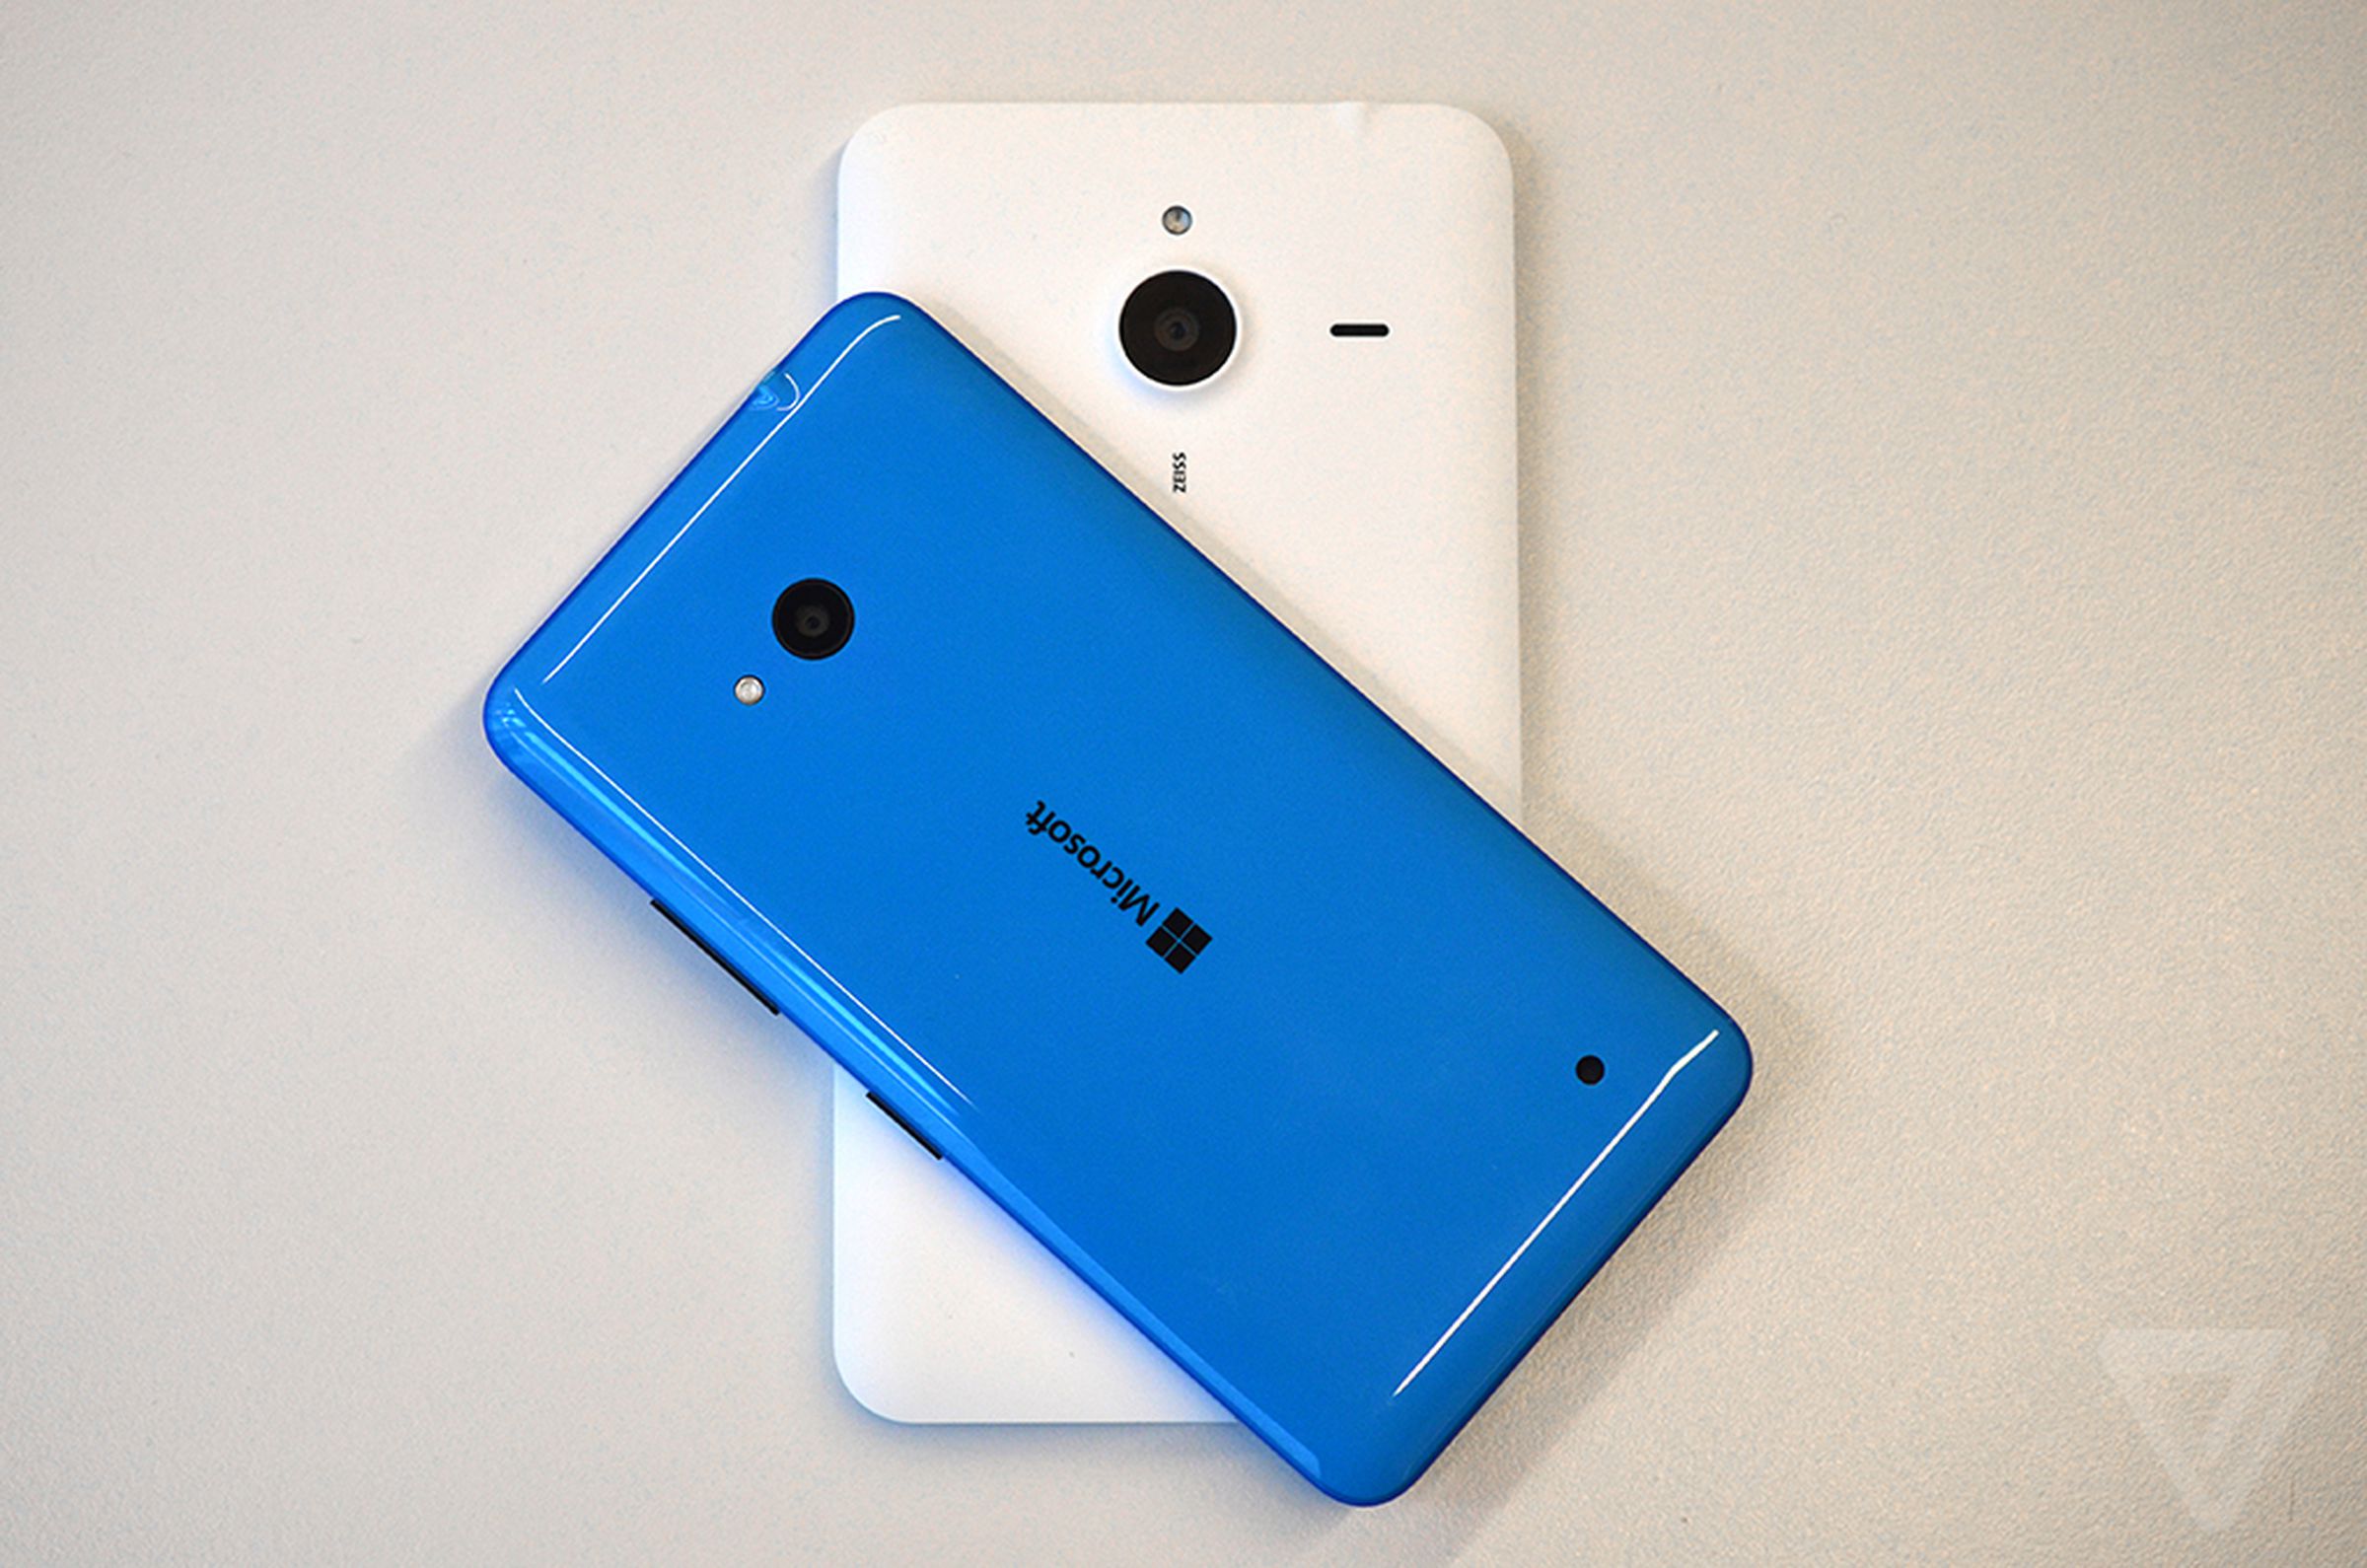 Lumia 640 and Lumia 640 XL photos